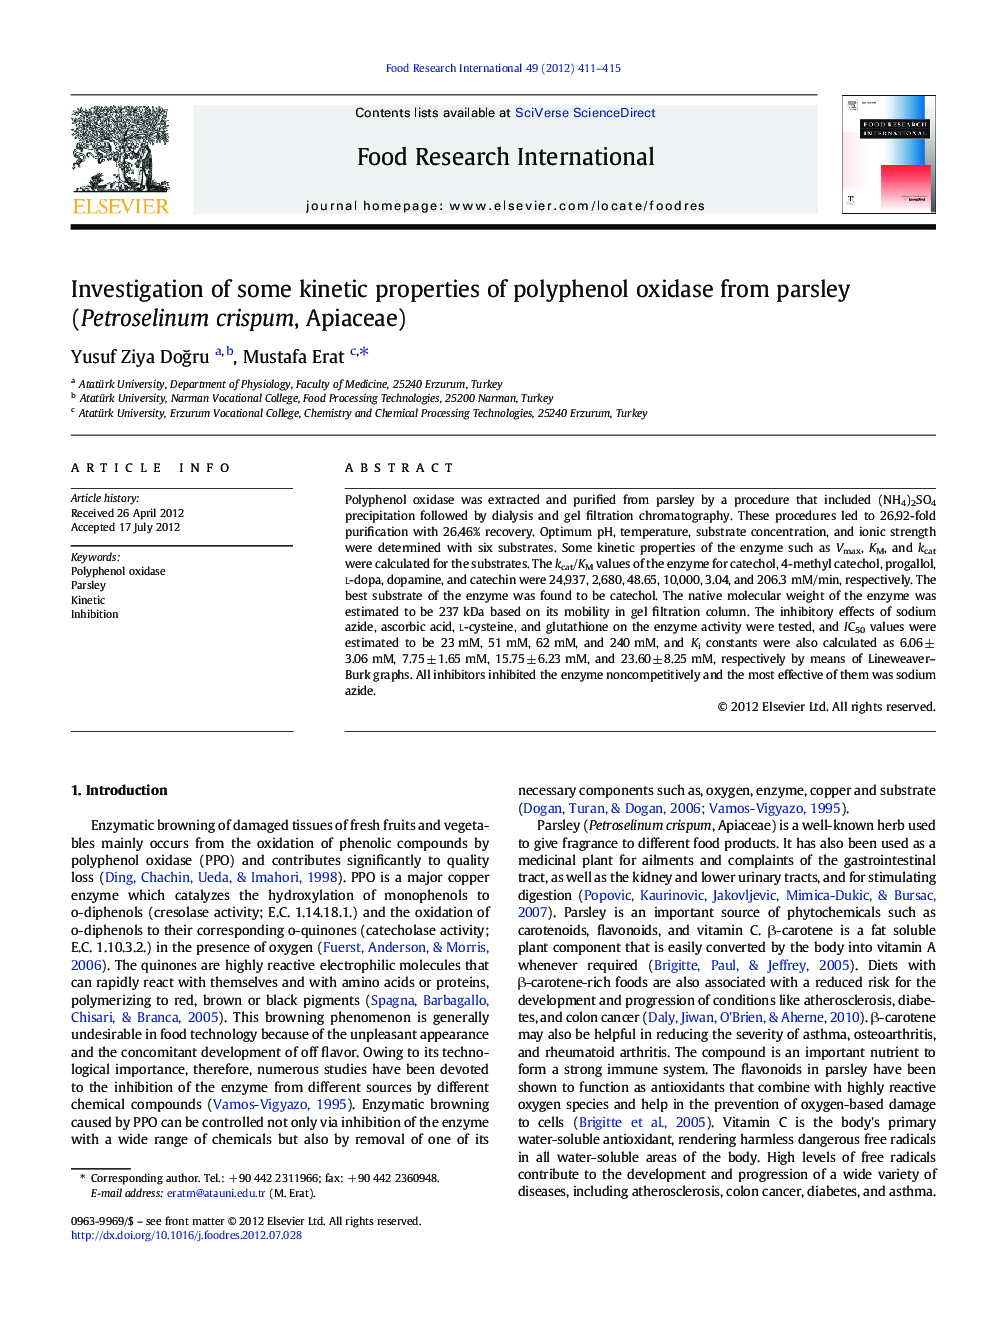 Investigation of some kinetic properties of polyphenol oxidase from parsley (Petroselinum crispum, Apiaceae)